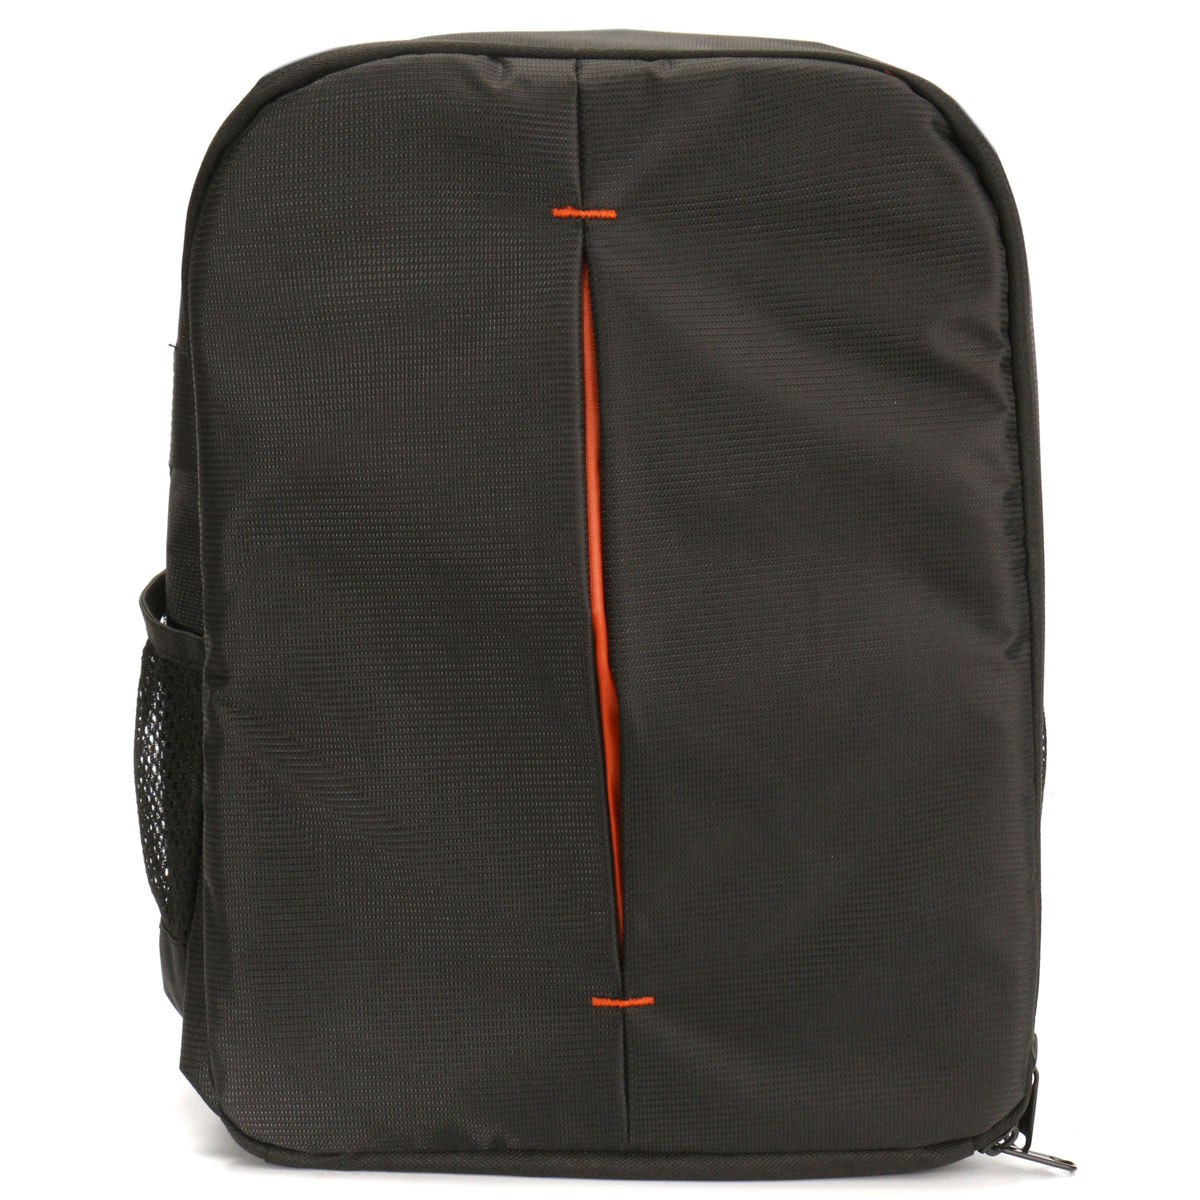 DL-B018 Waterproof Backpack Rucksack Case Bag for DSLR Caerma 12